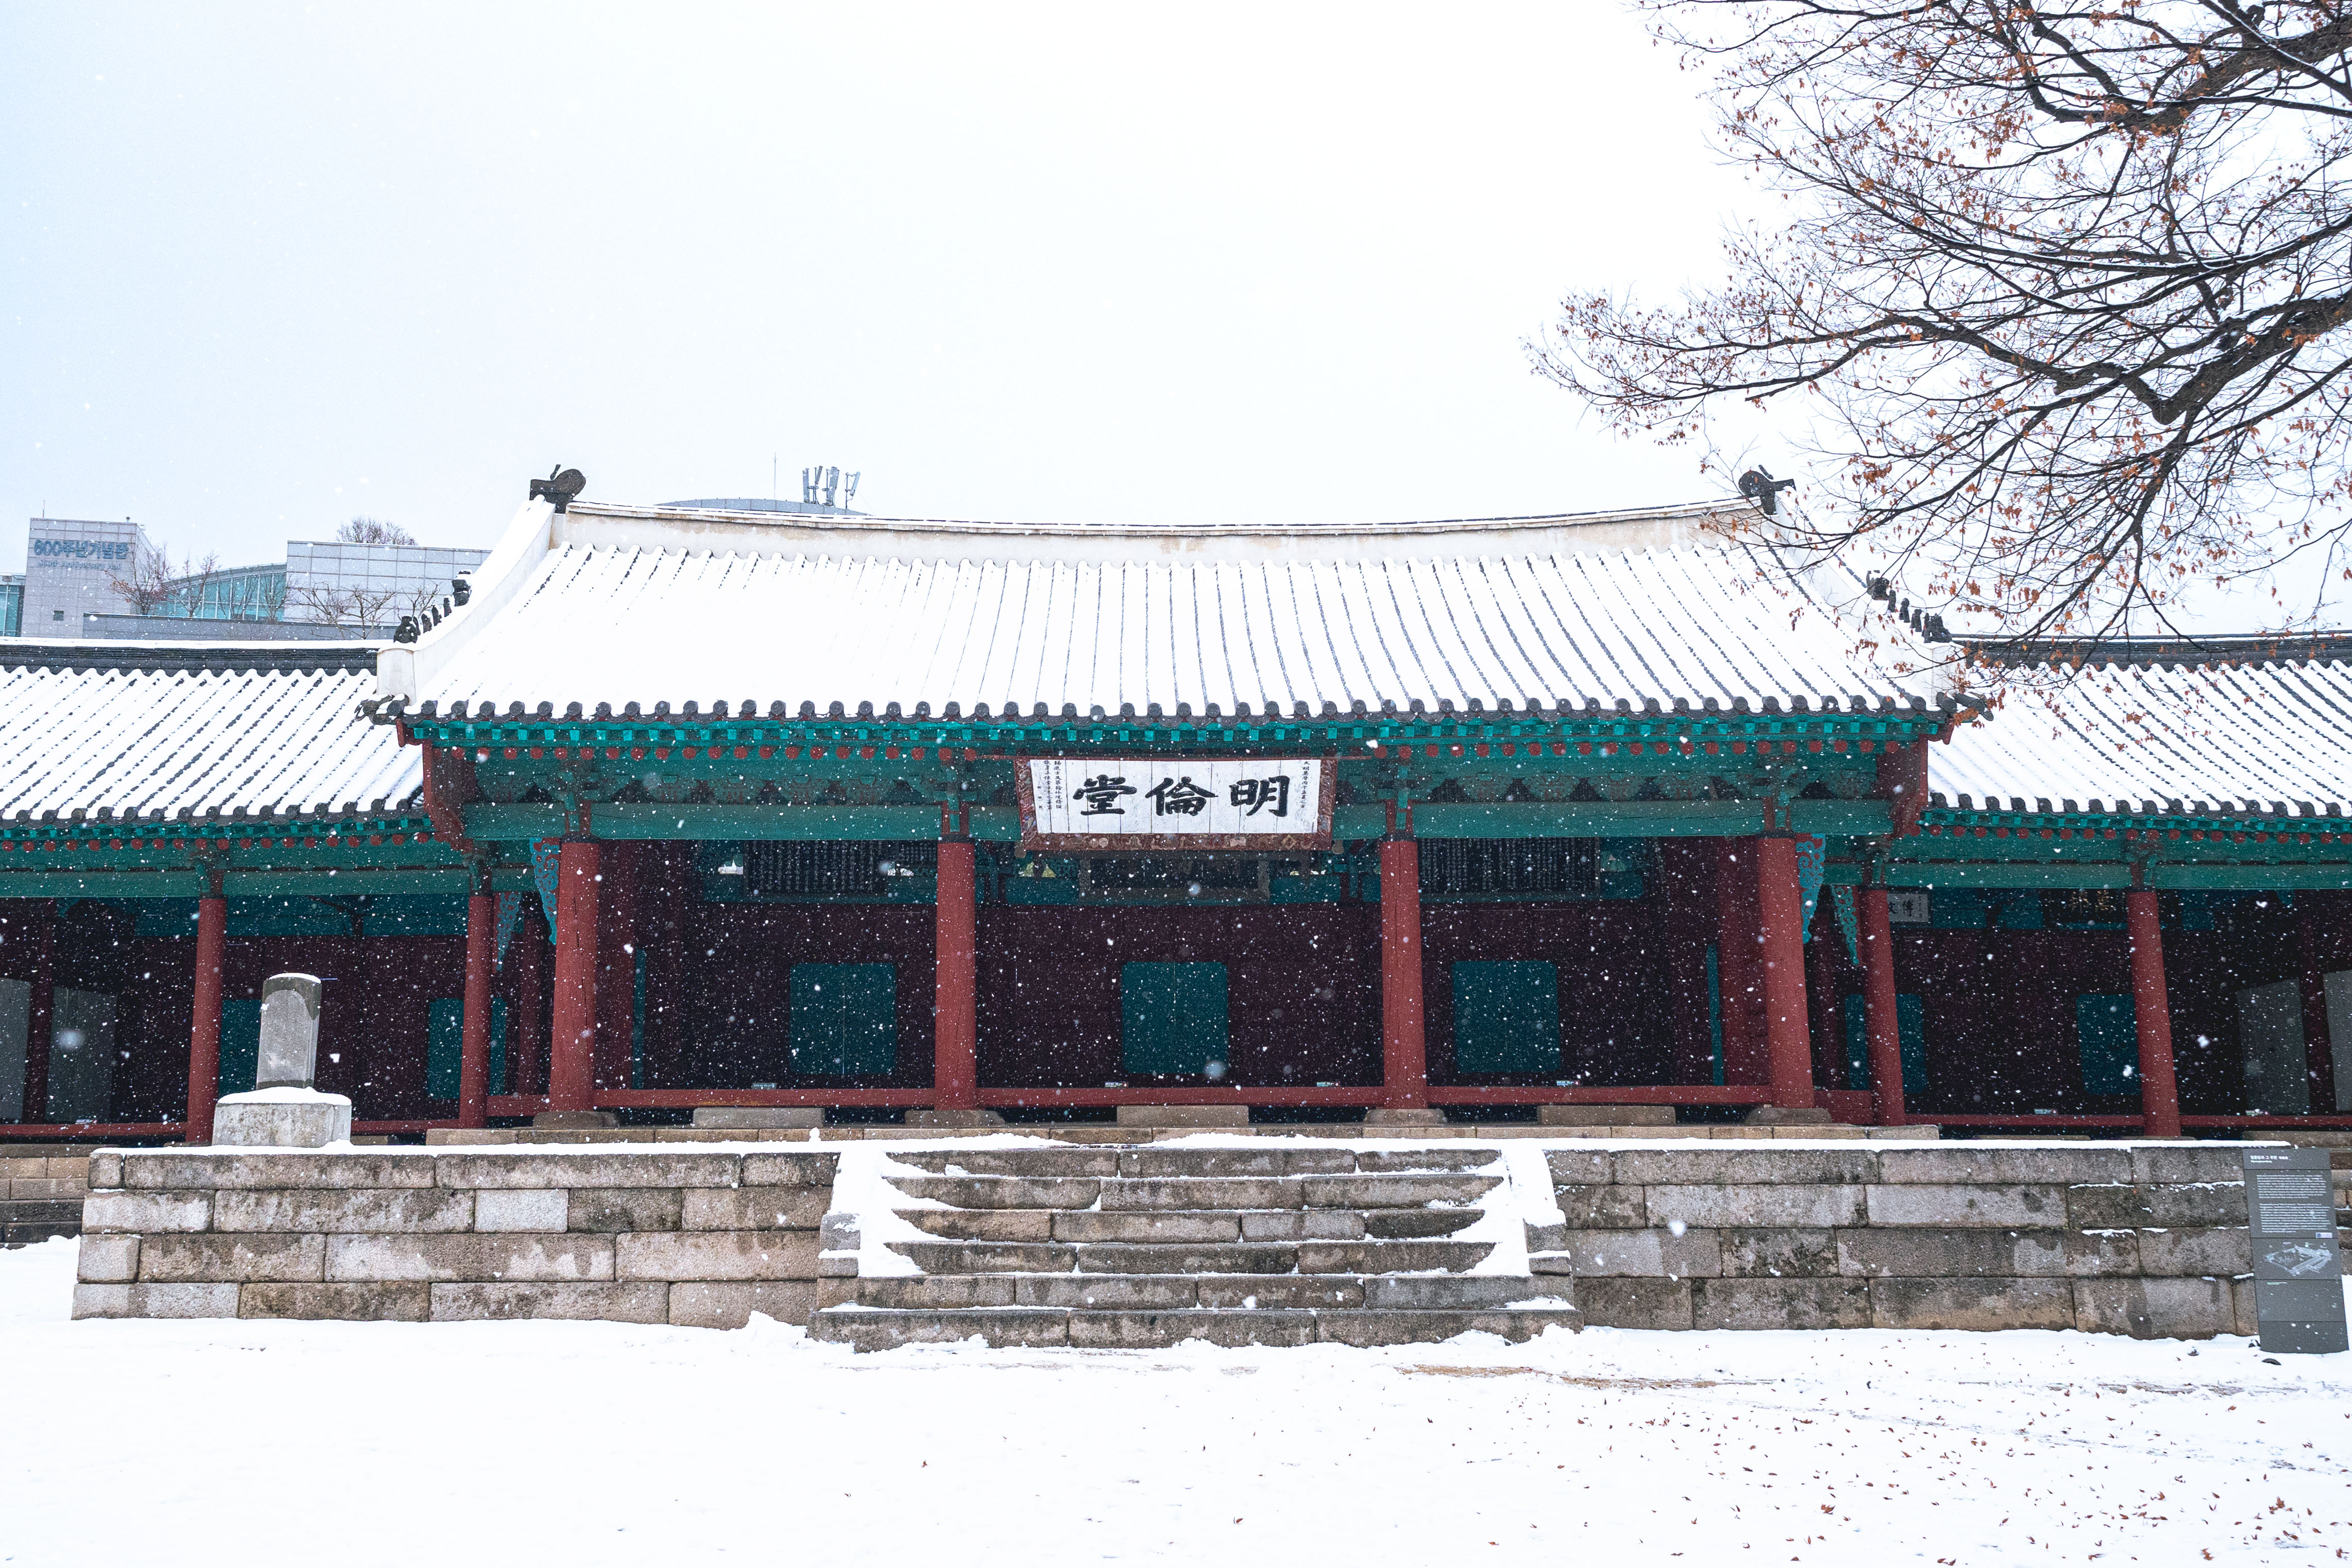 The Snowy Myeongnyundang